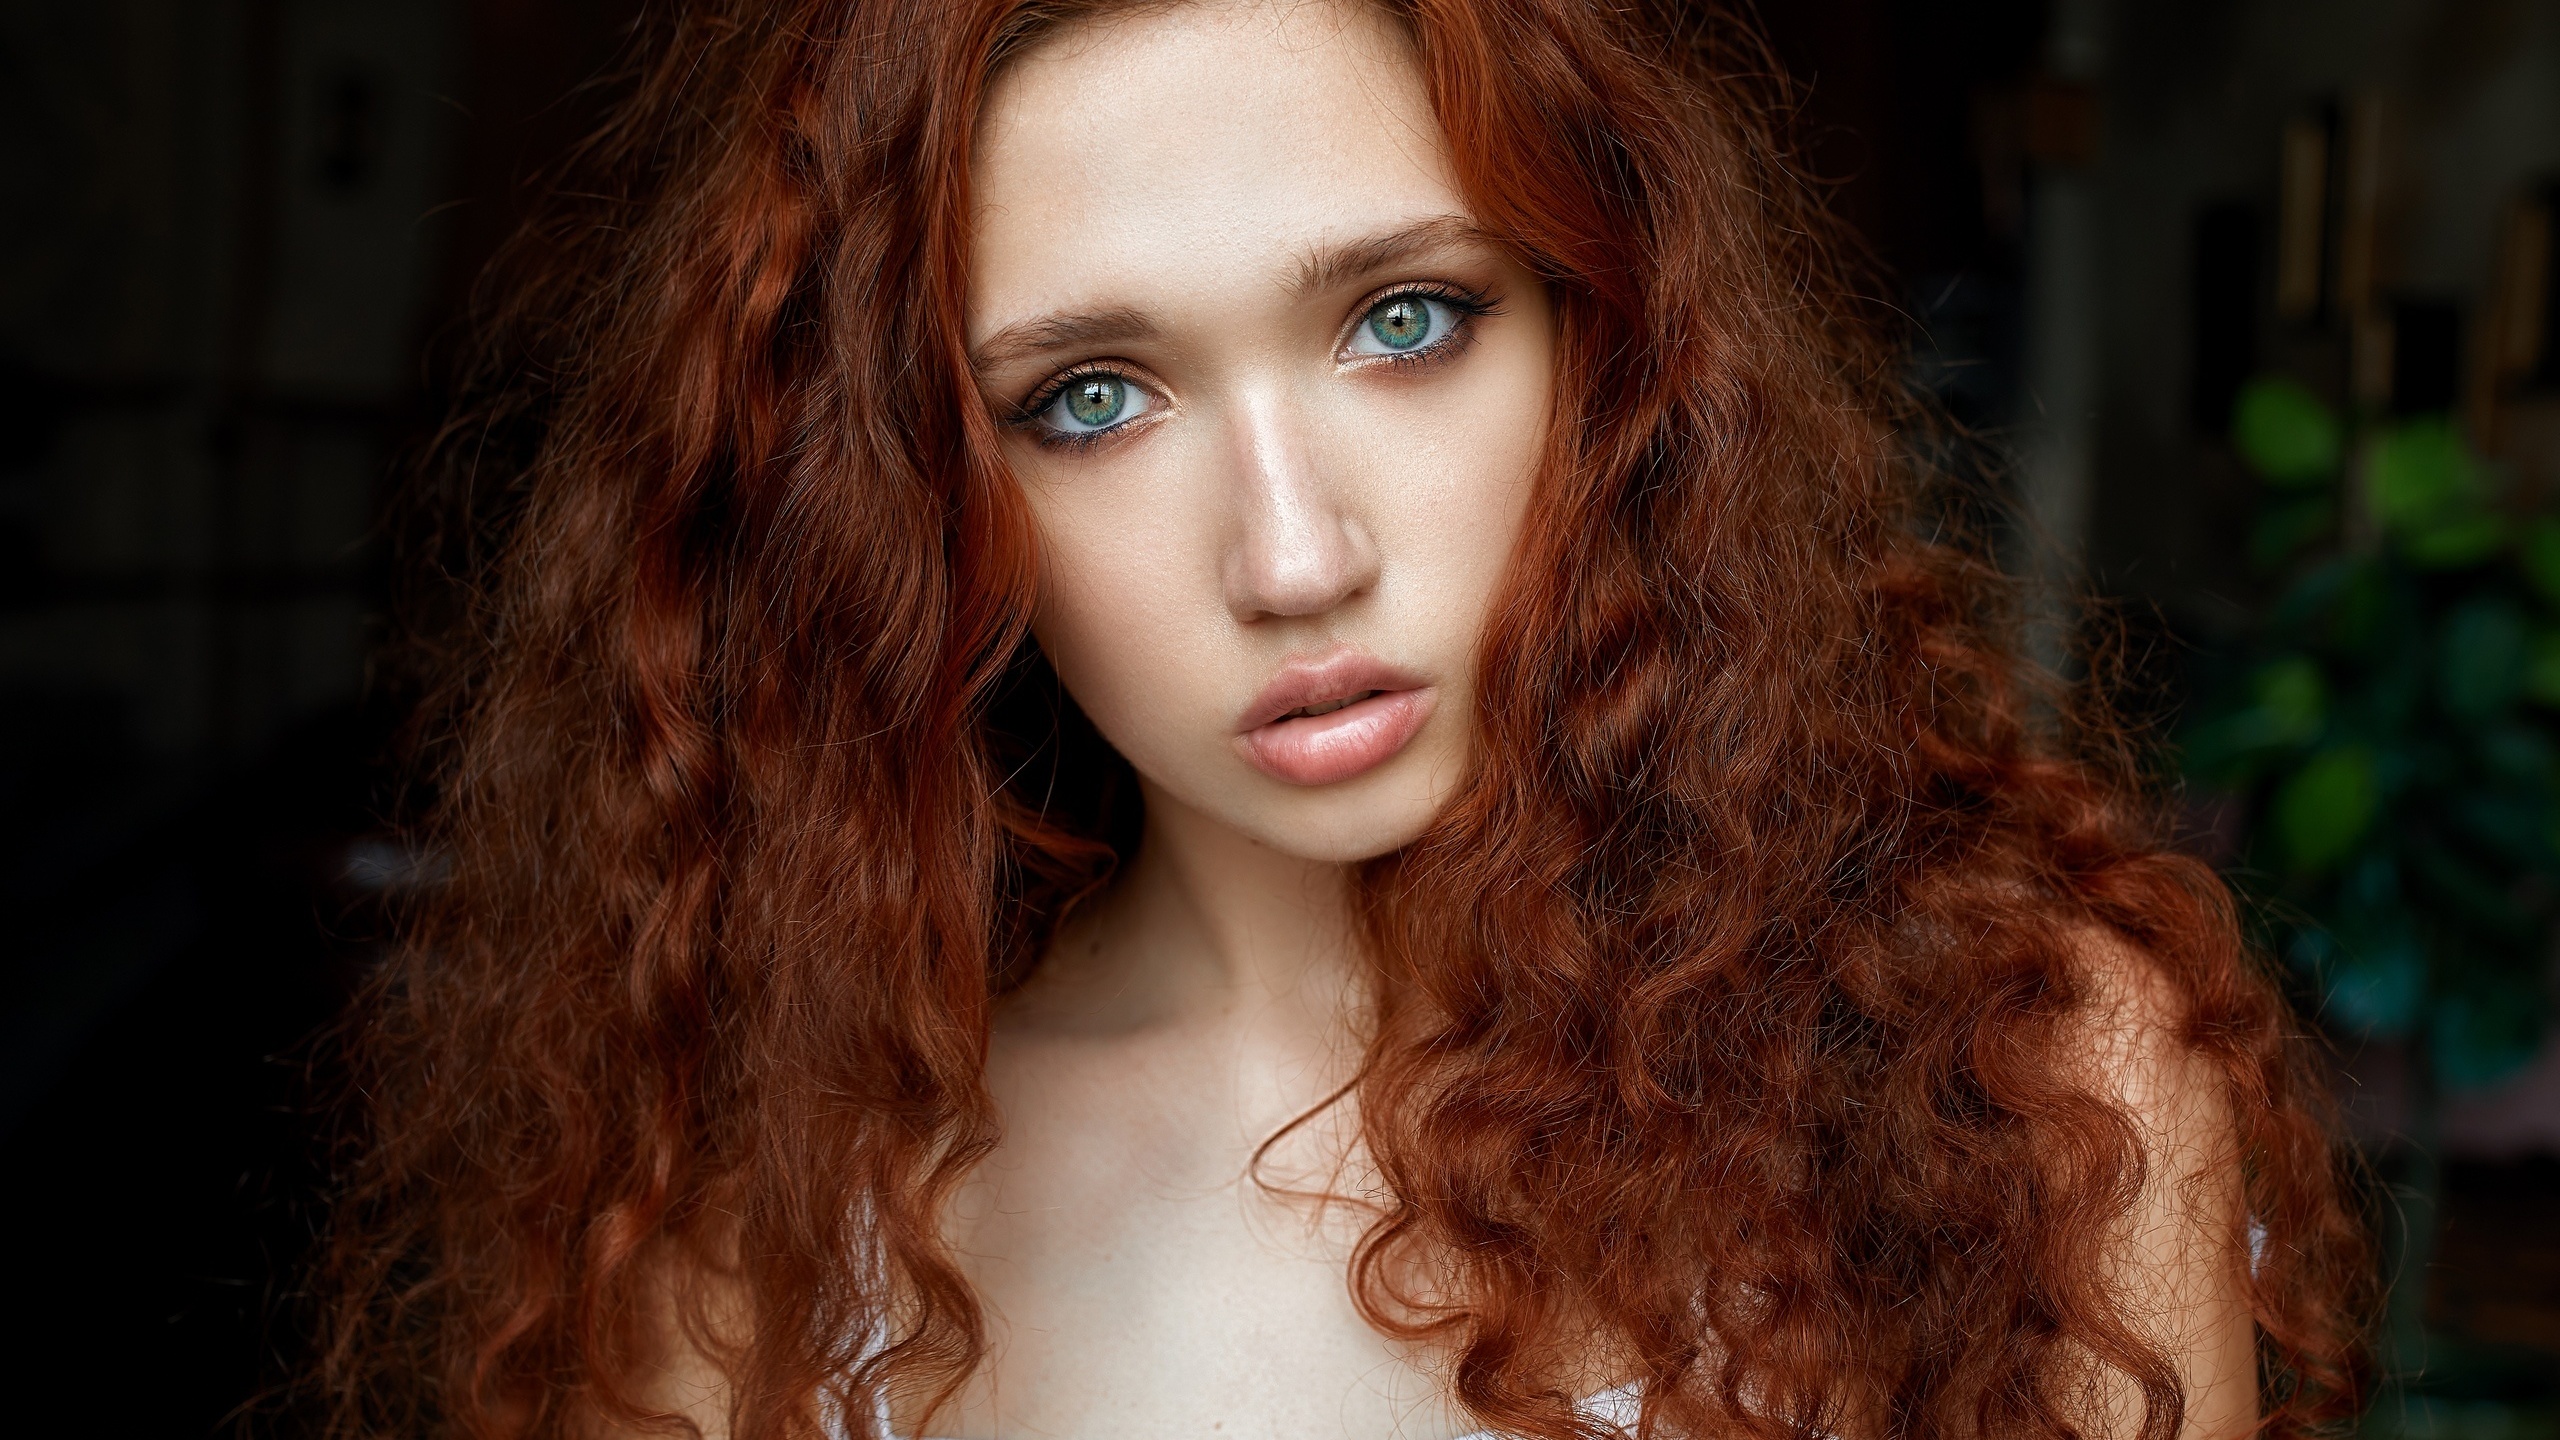 women, redhead, face, portrait, pink lipstick, green eyes, white dress,  